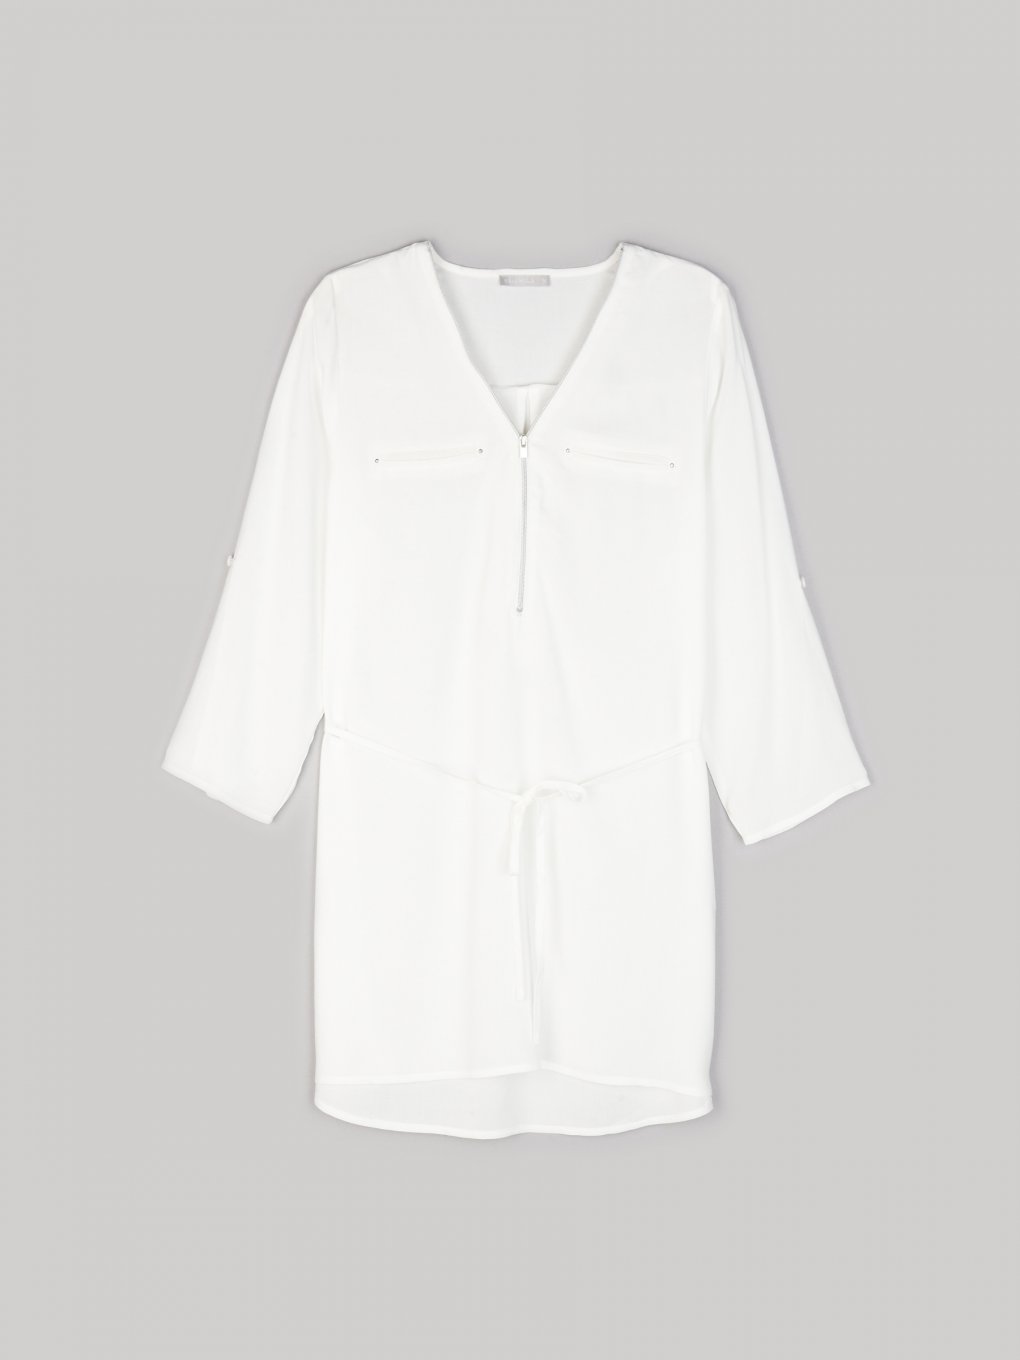 Longline blouse with zipper